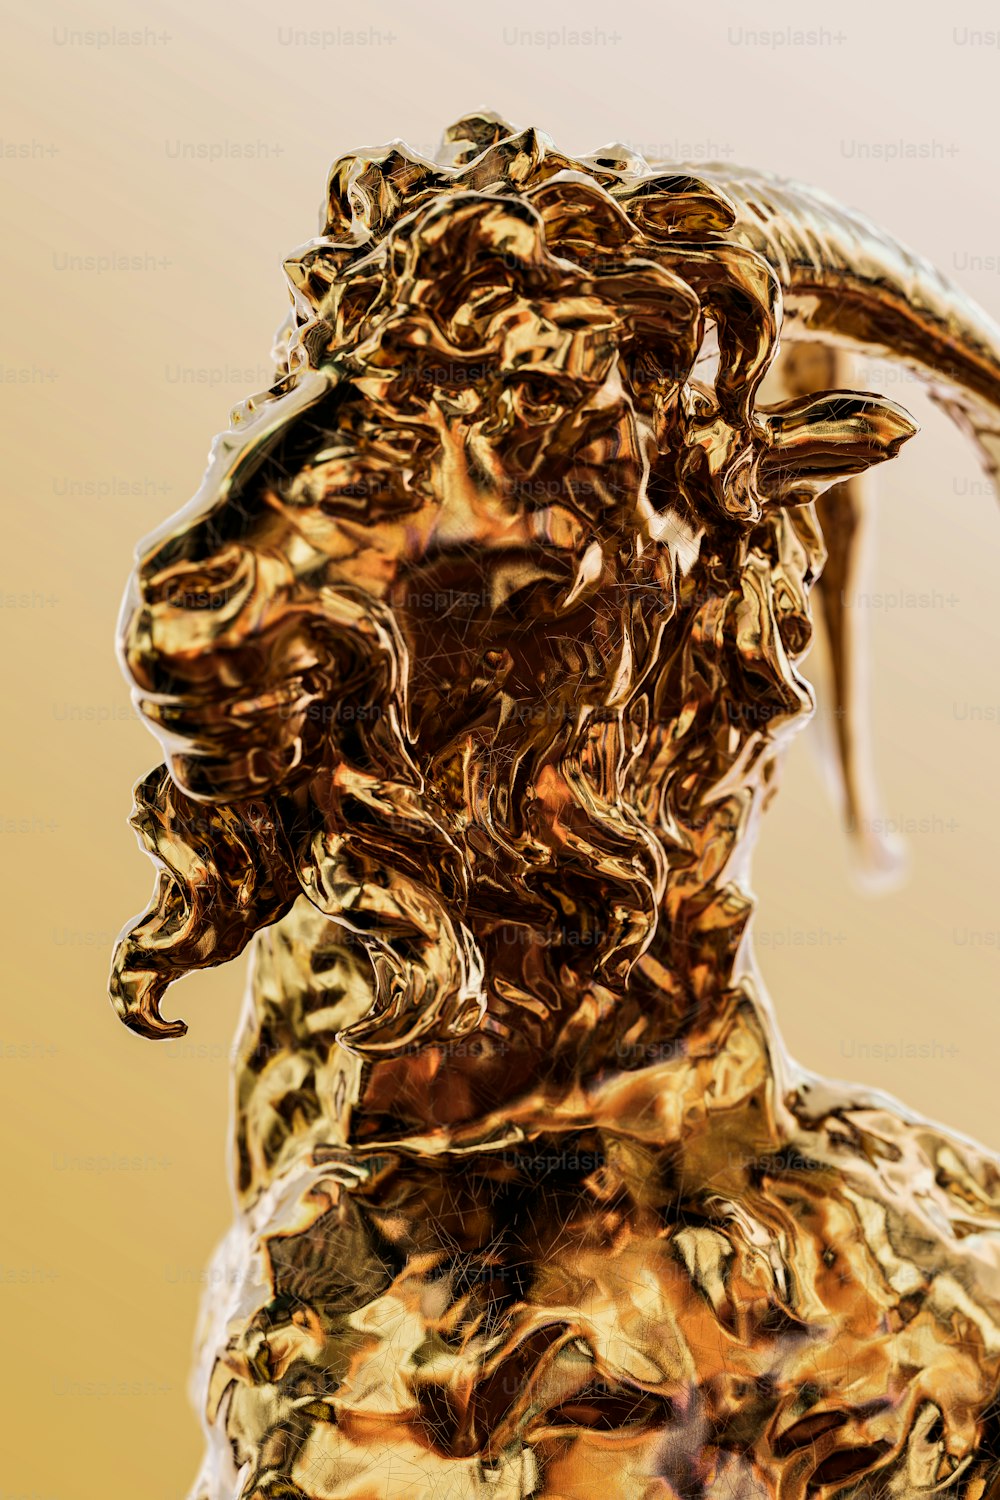 una statua dorata di una capra con lunghe corna